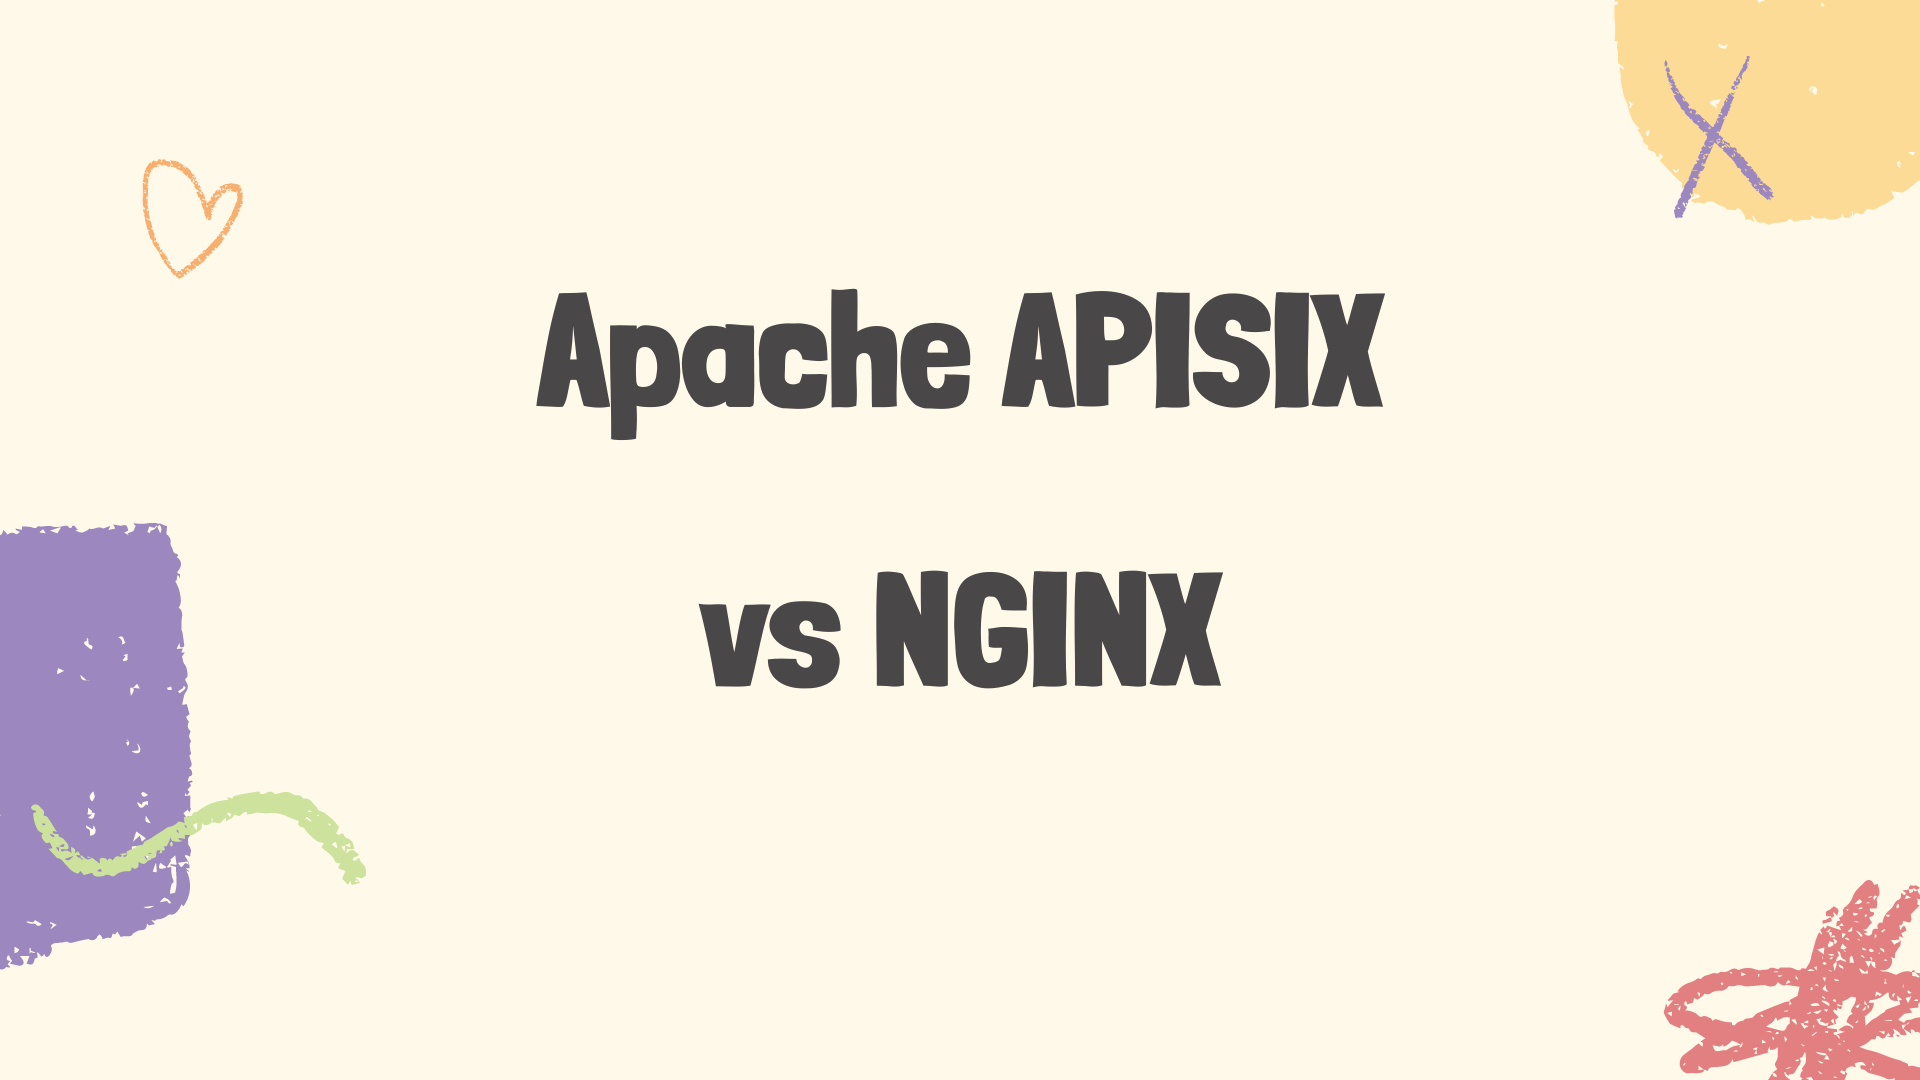 Apache APISIX vs NGINX